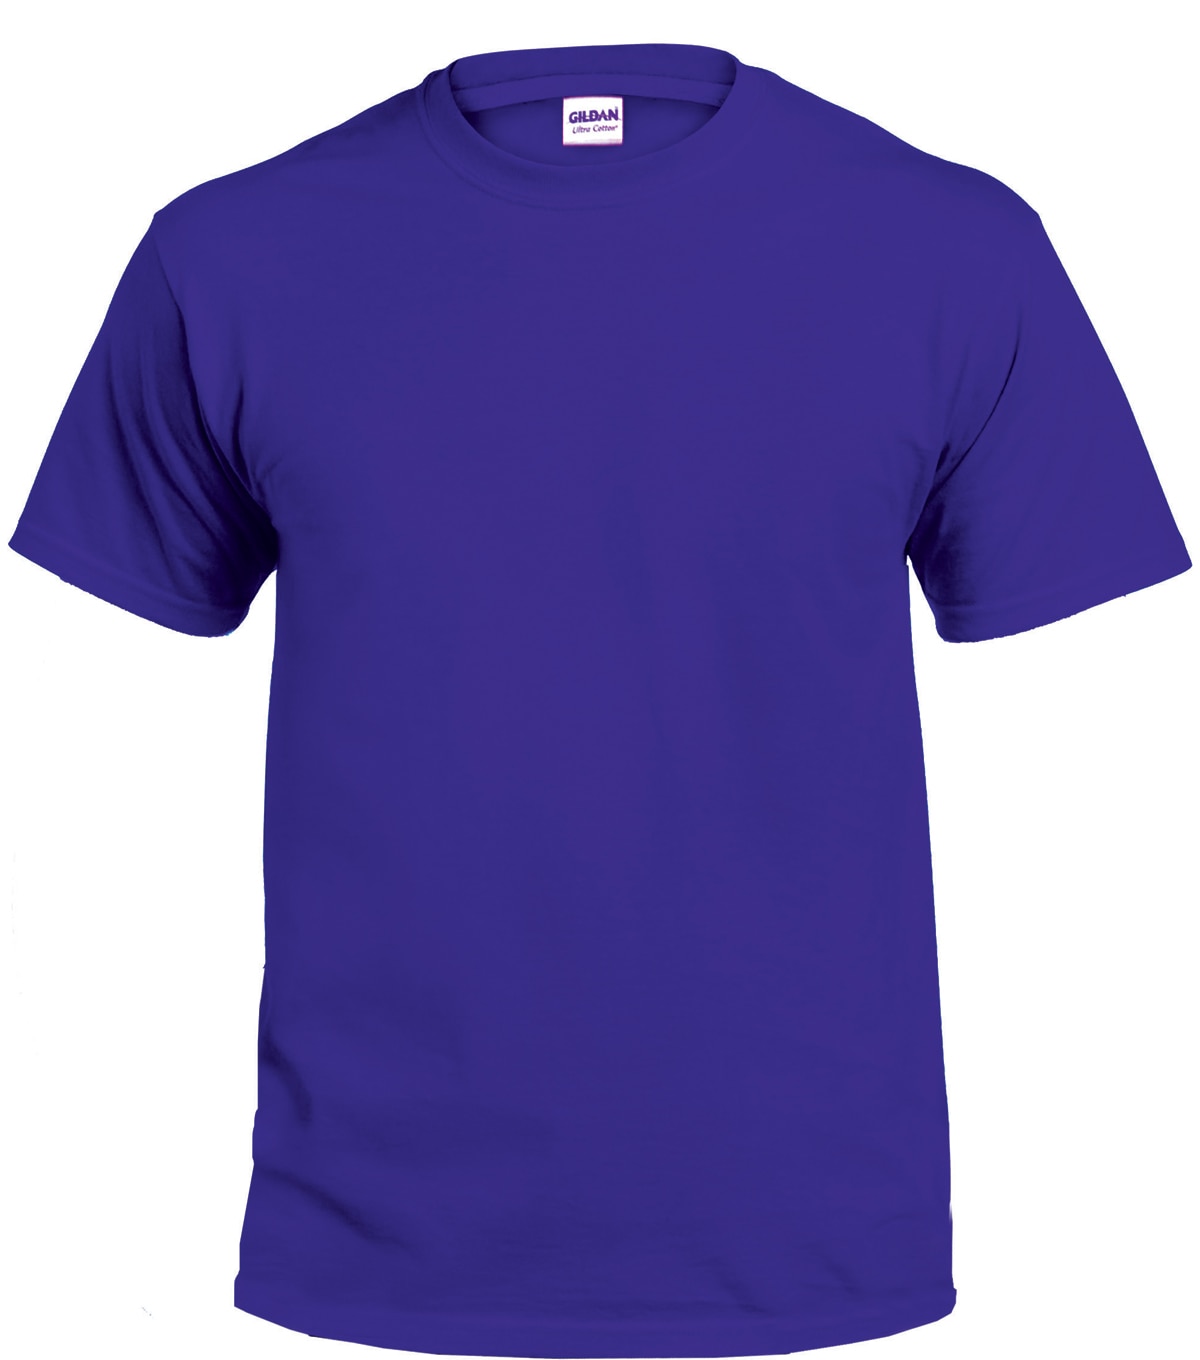 Gildan Adult T-shirt X-Large | JOANN